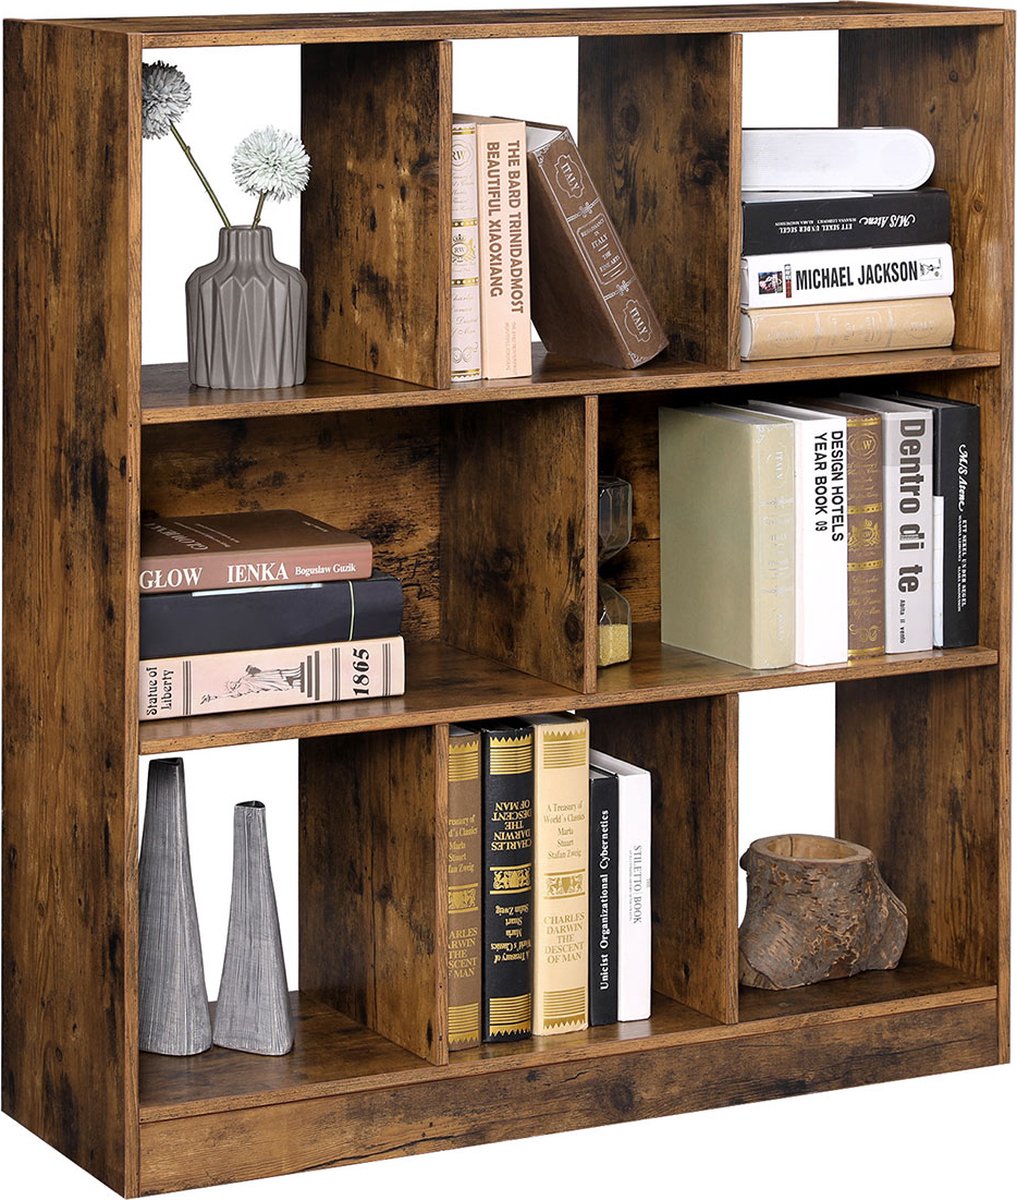 Signature Home boekenKast - kubusrek - staande plank - boekenKast met open vakken - voor woonkamer - studeerkamer - vintage bruin - 97,5 x 30 x 100 cm